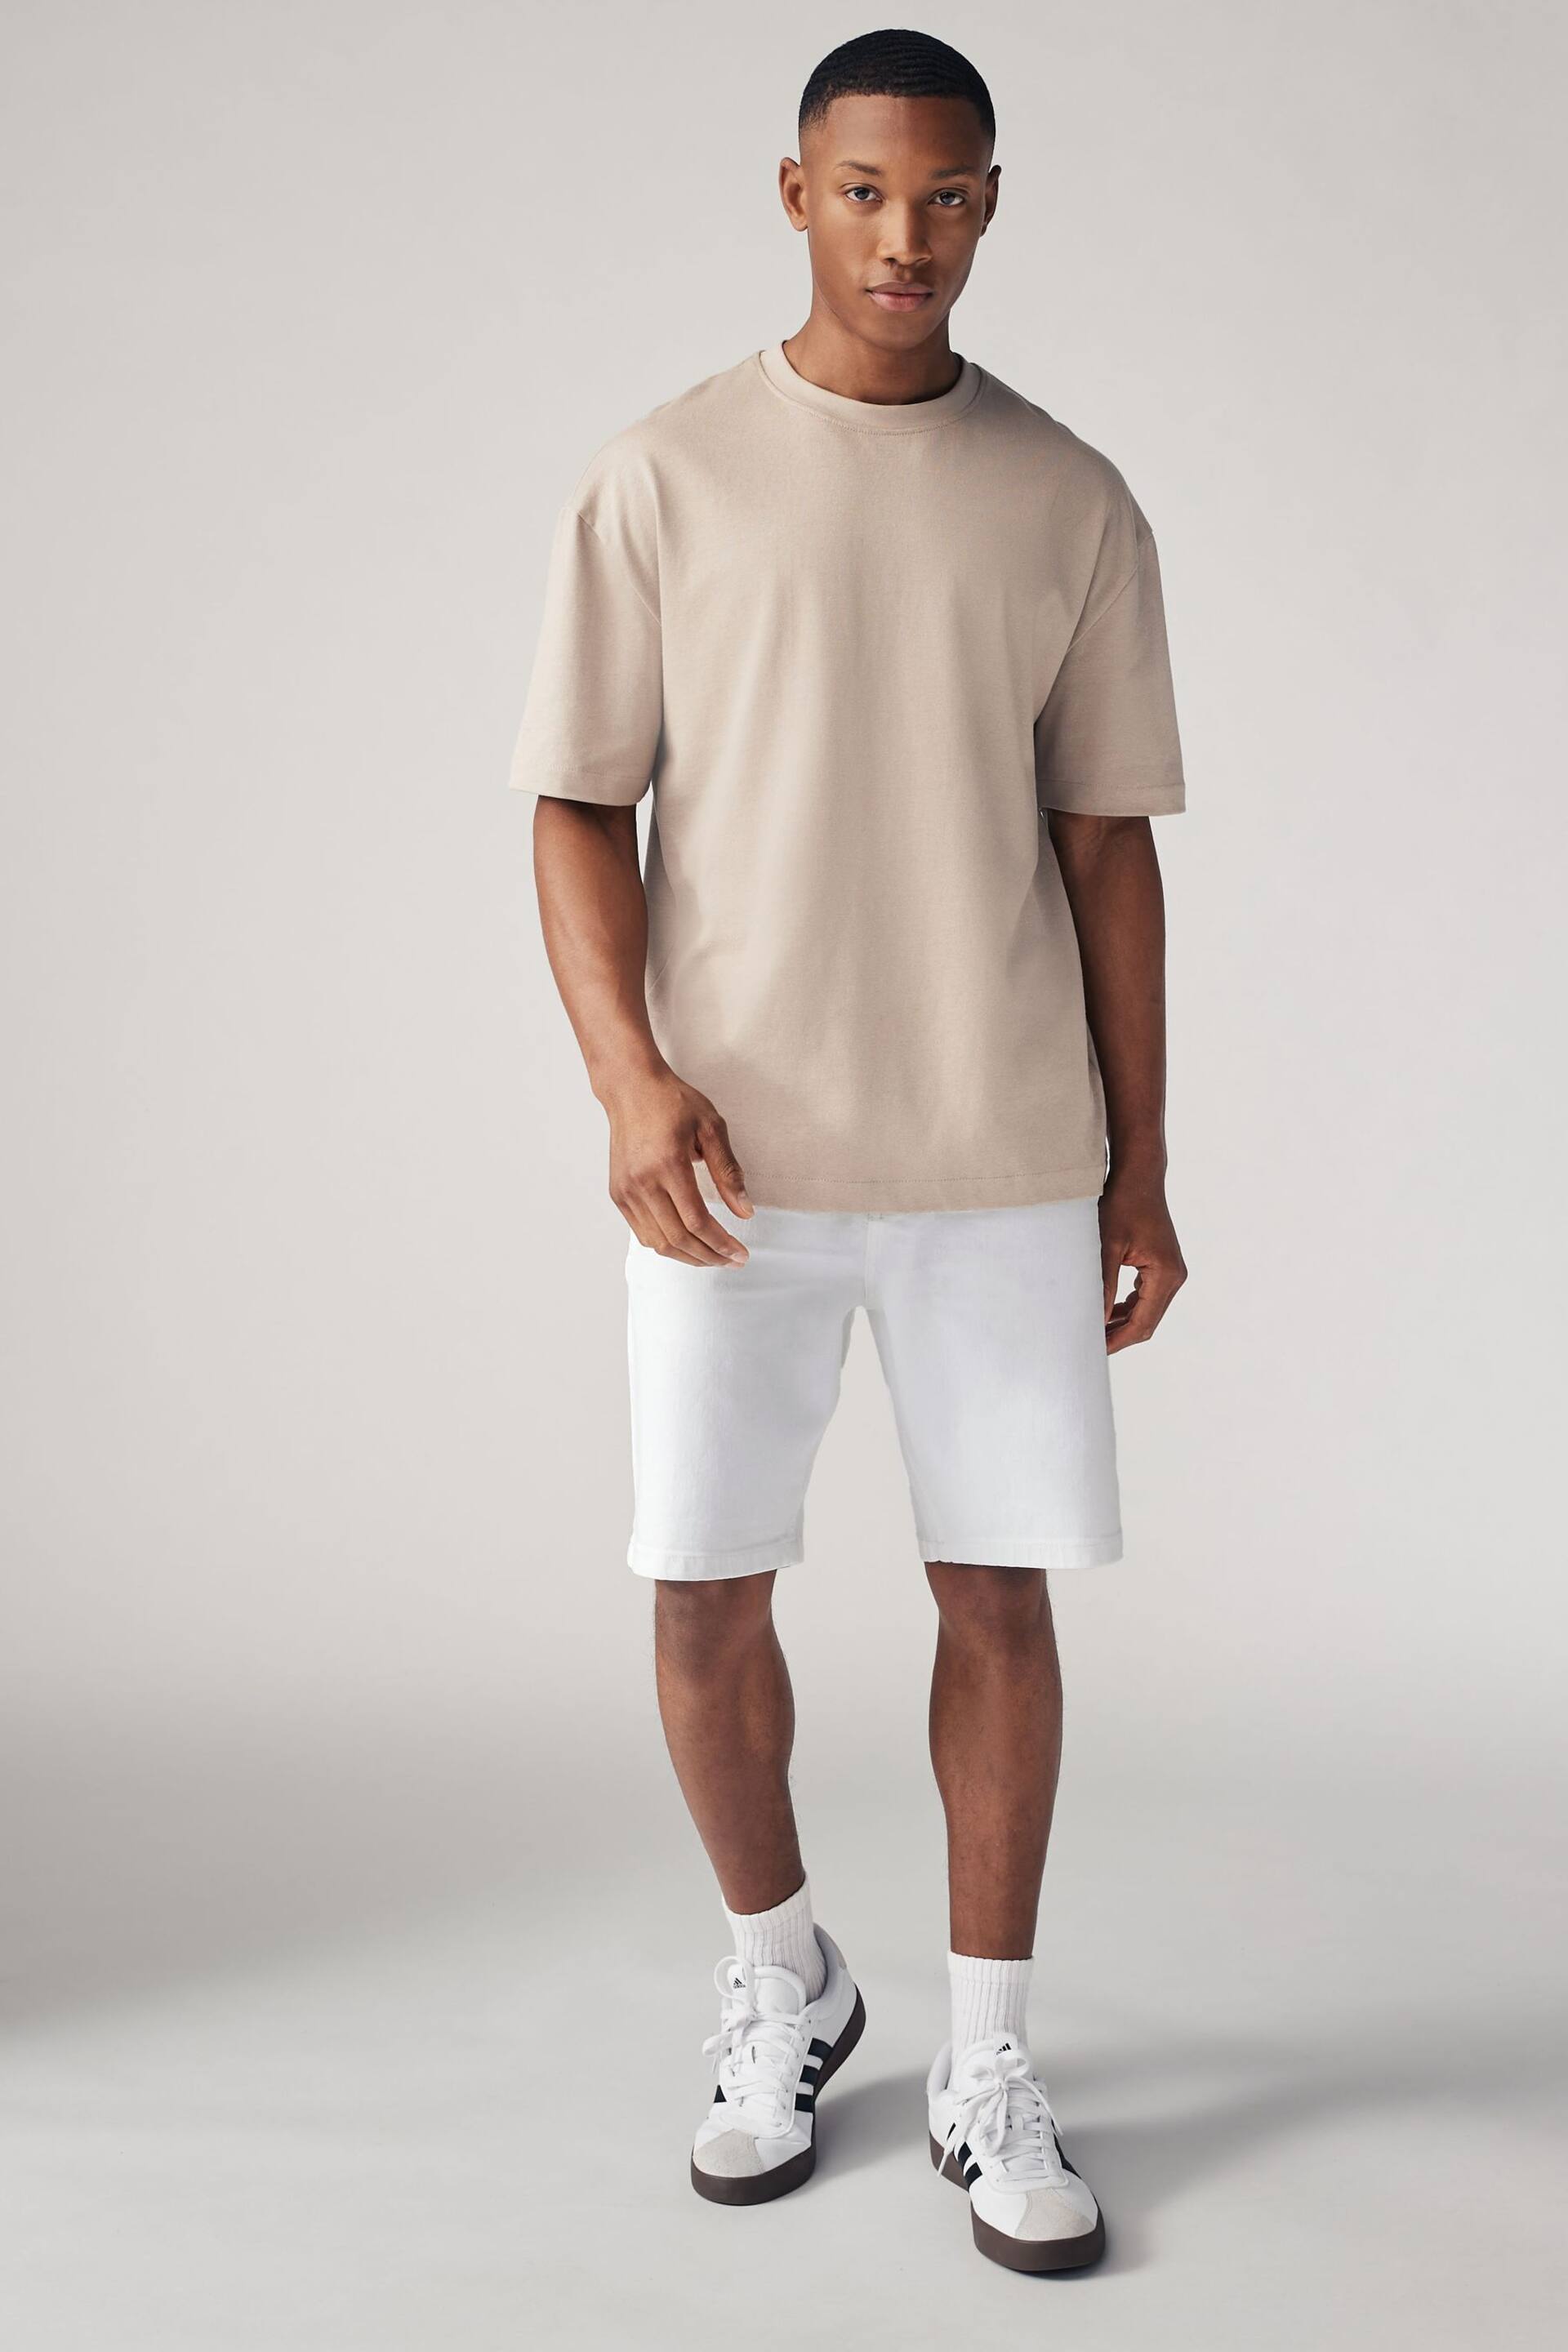 White Garment Dye Denim Shorts - Image 3 of 8